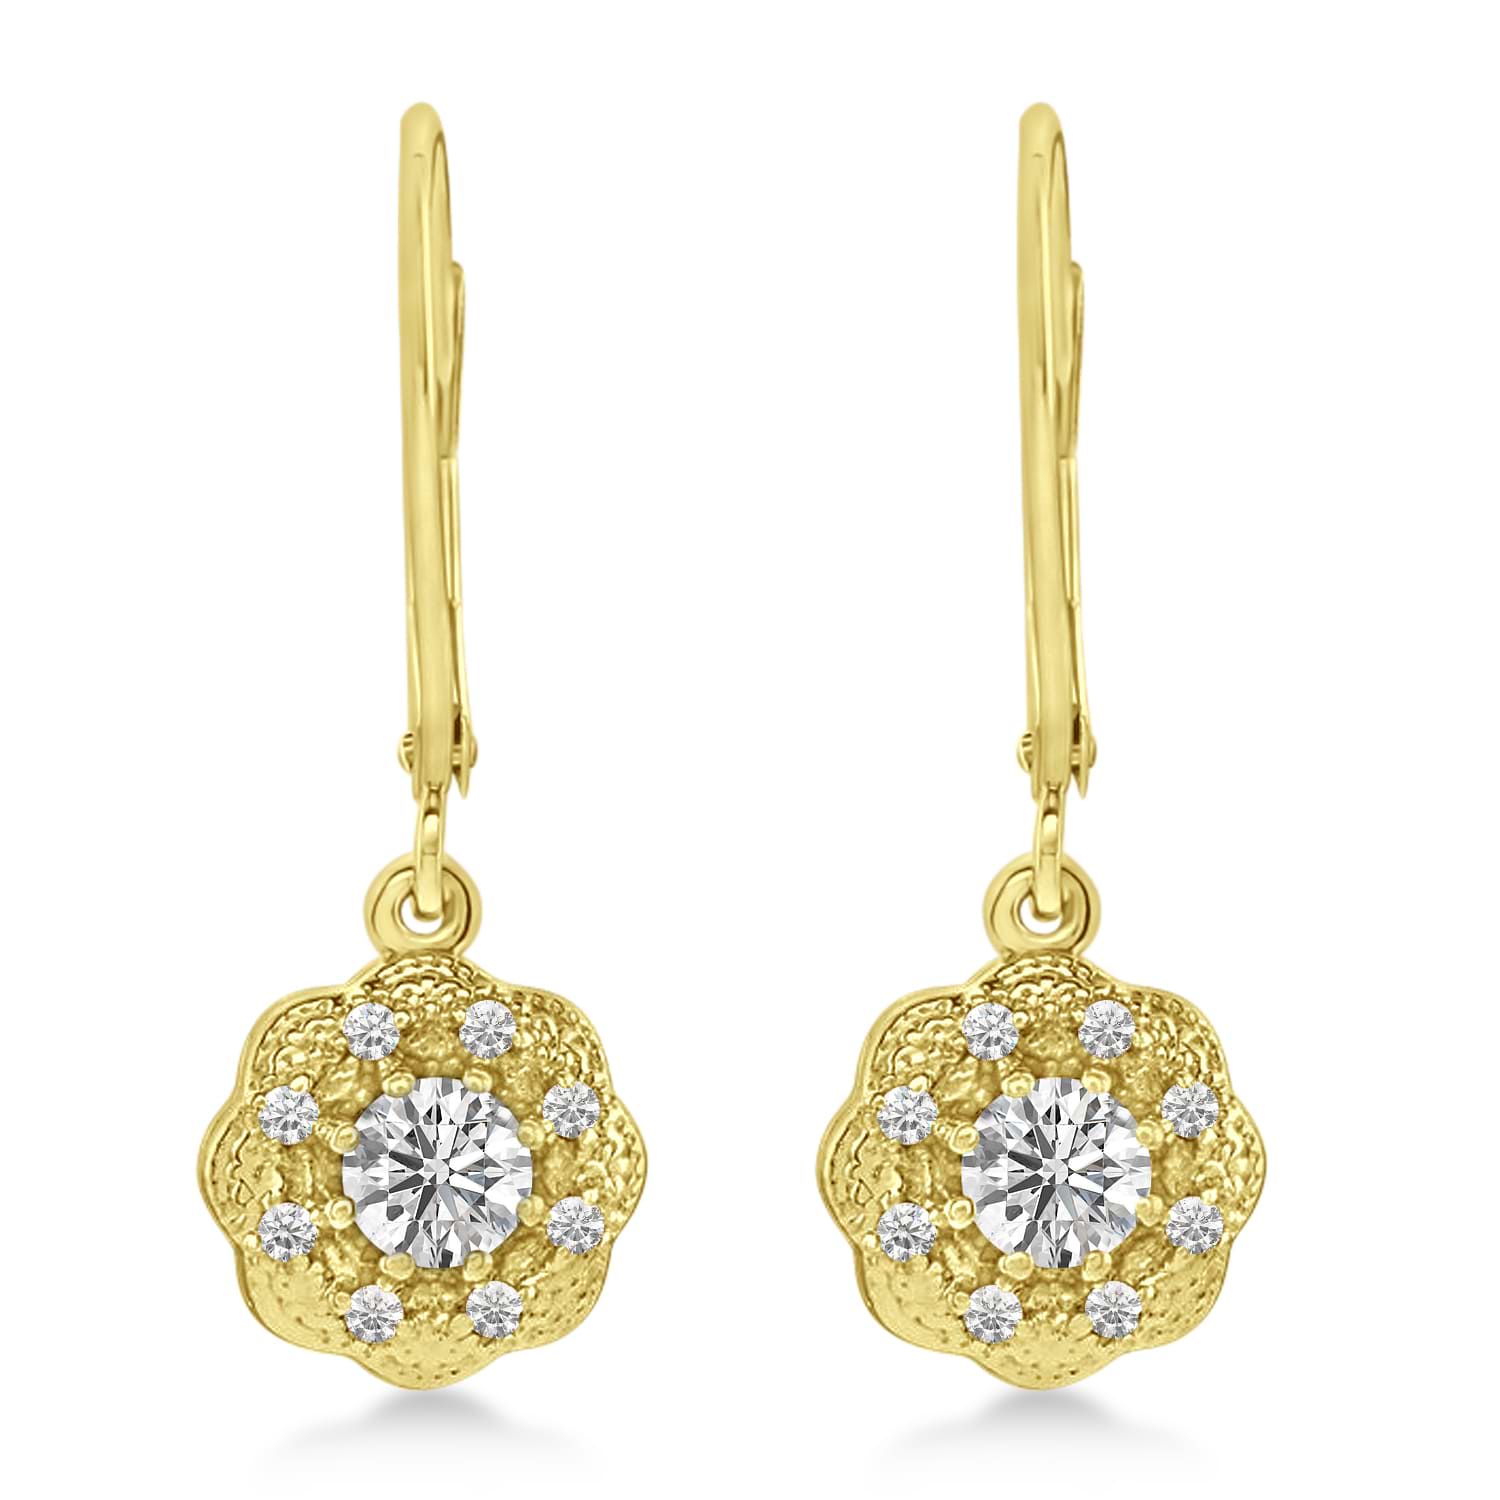 Moissanite & Diamond Leverback Floral Earrings 14k Yellow Gold (0.64 ctw)